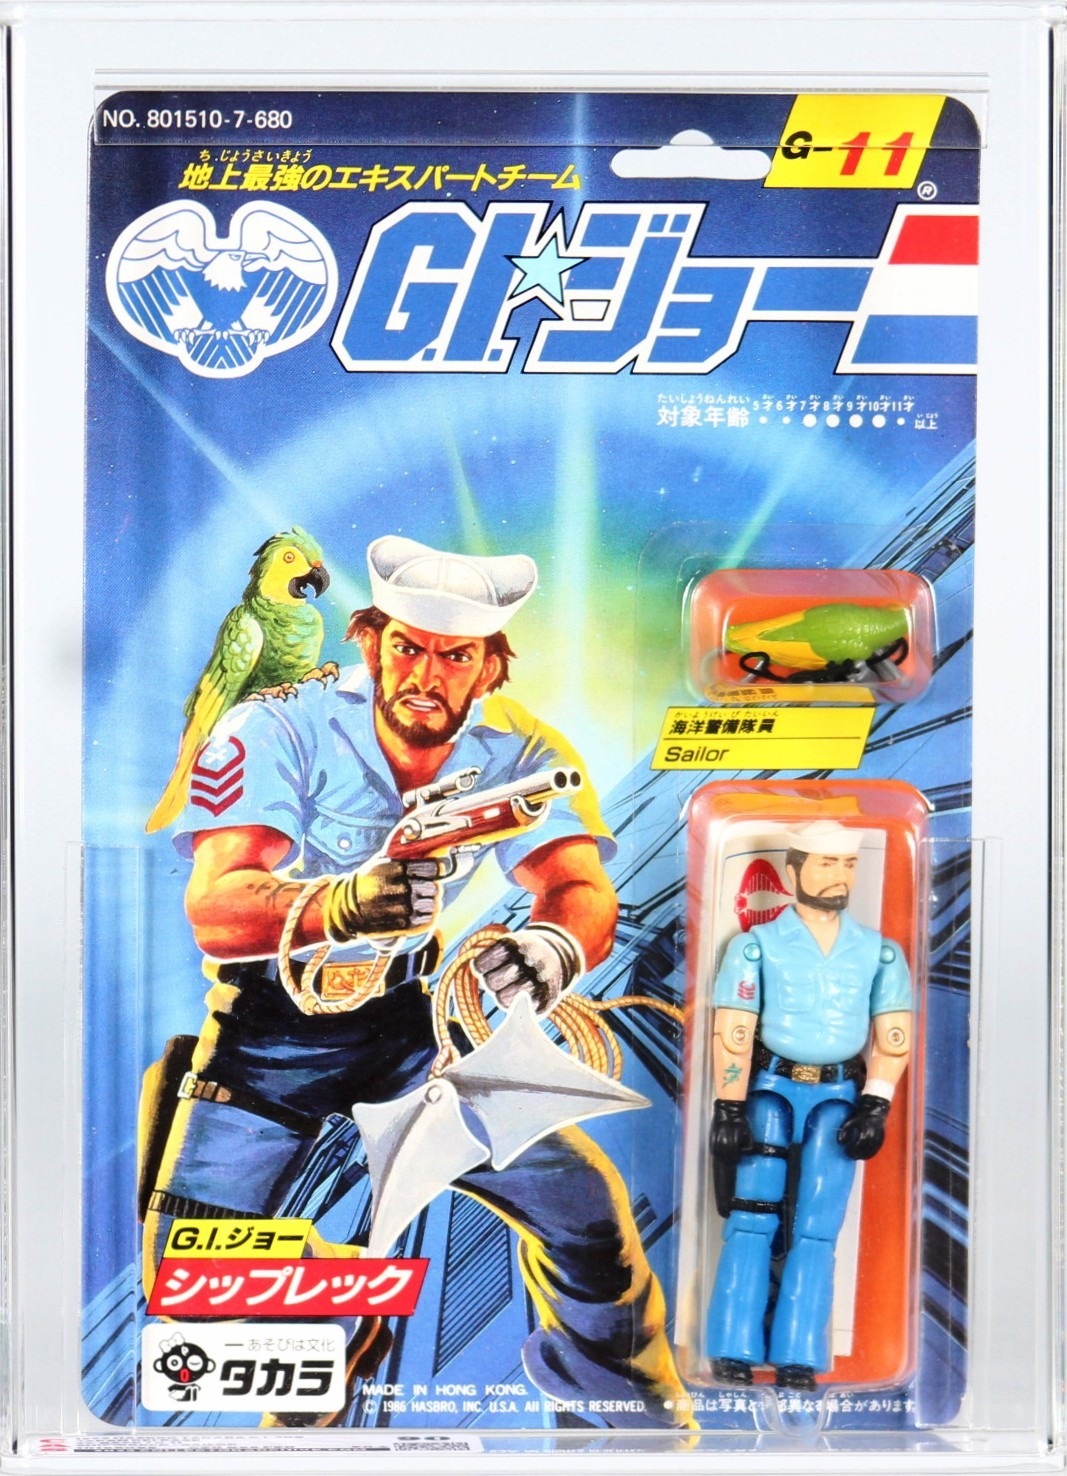 1986 Hasbro Takara G.I. Joe Carded Action Figure - Shipwreck G-11